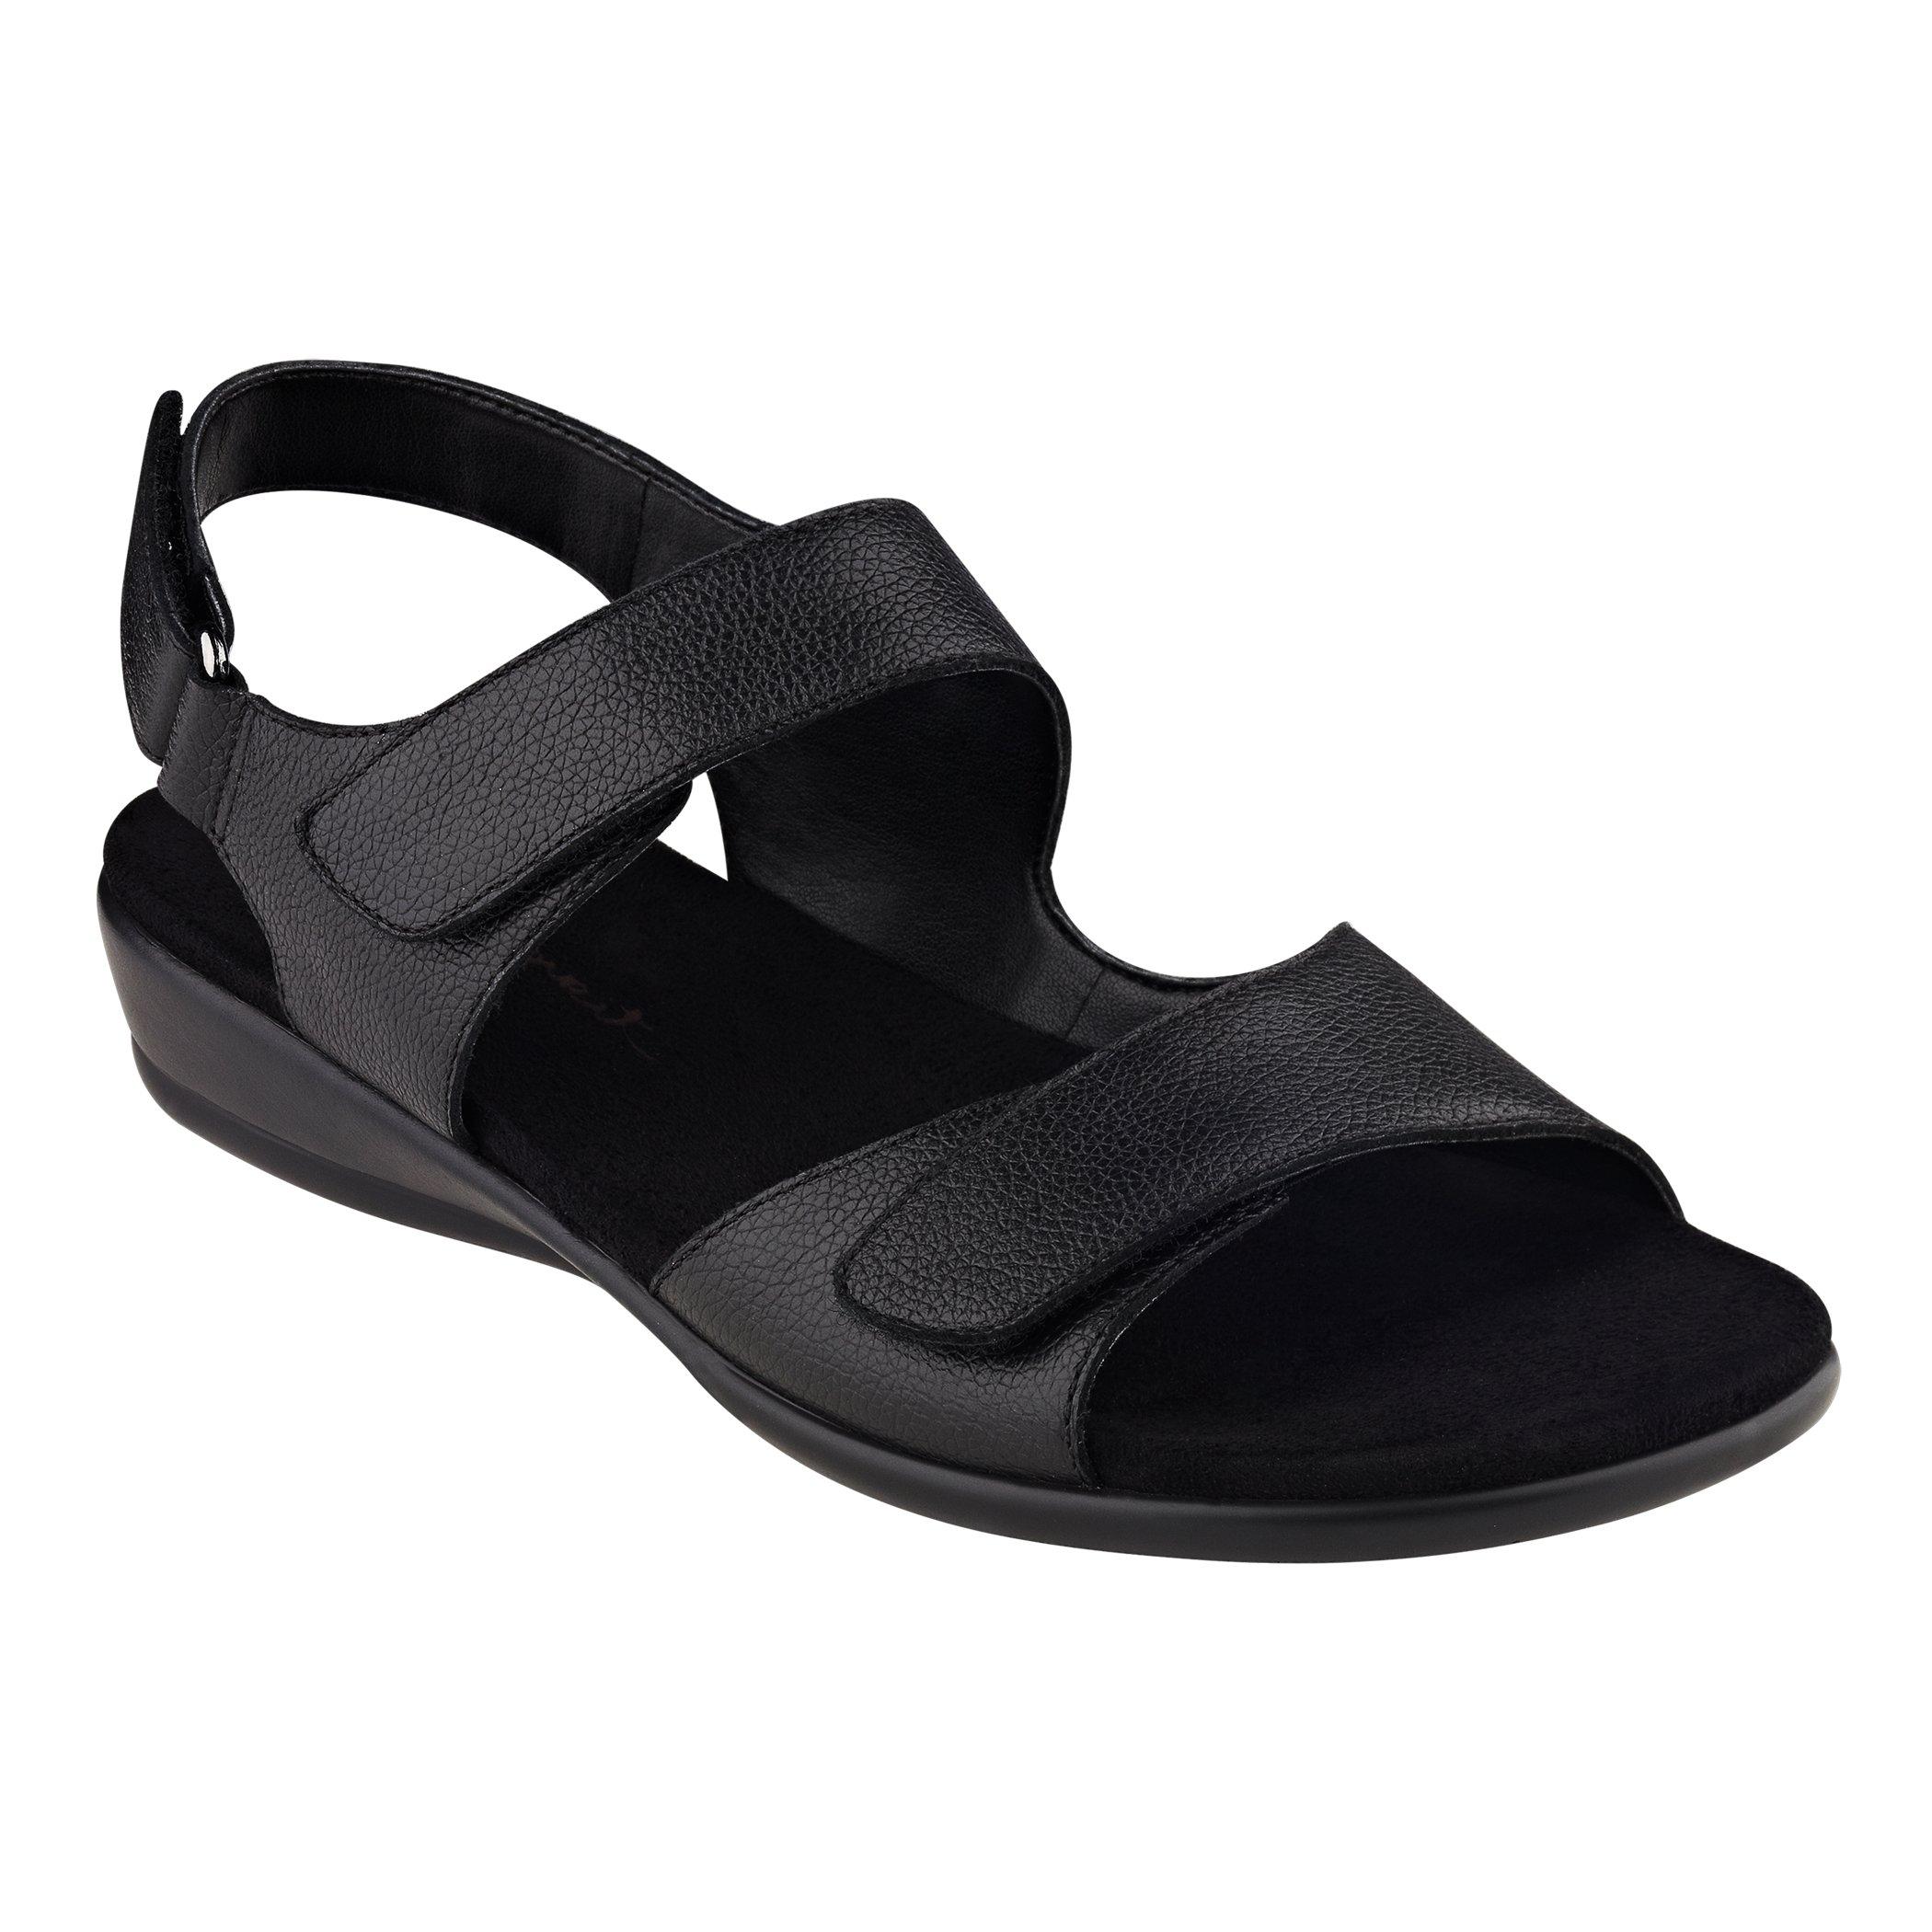 Easy Spirit Hartwell Flat Sandals in Black Leather (Black) - Lyst